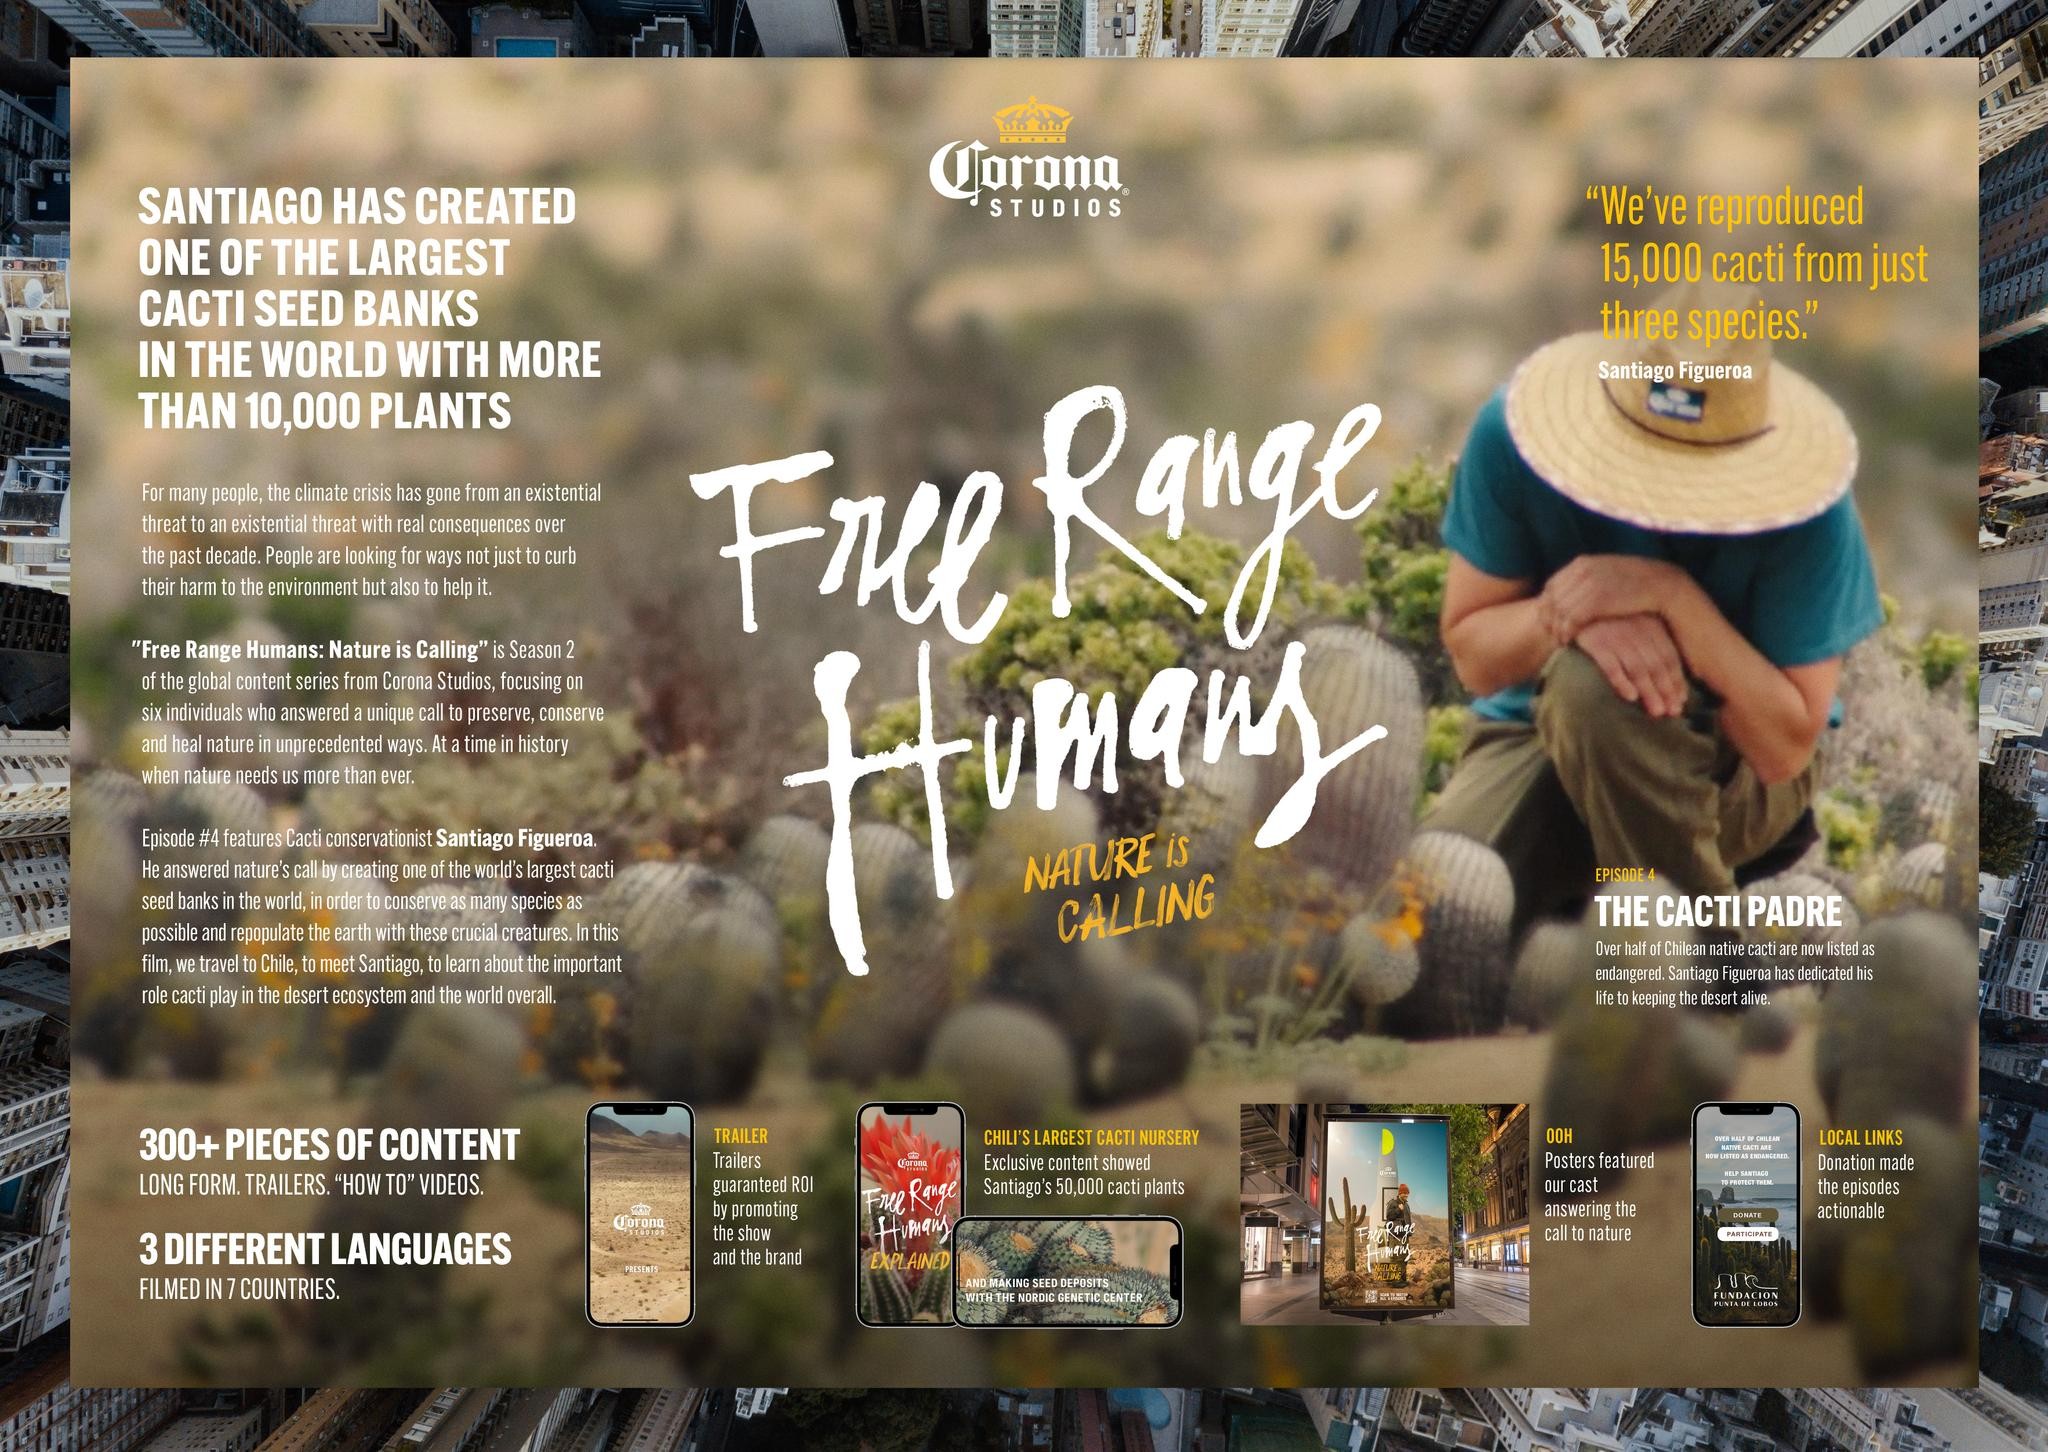 Free Range Humans Season 2: Nature is Calling "The Cacti Padre"